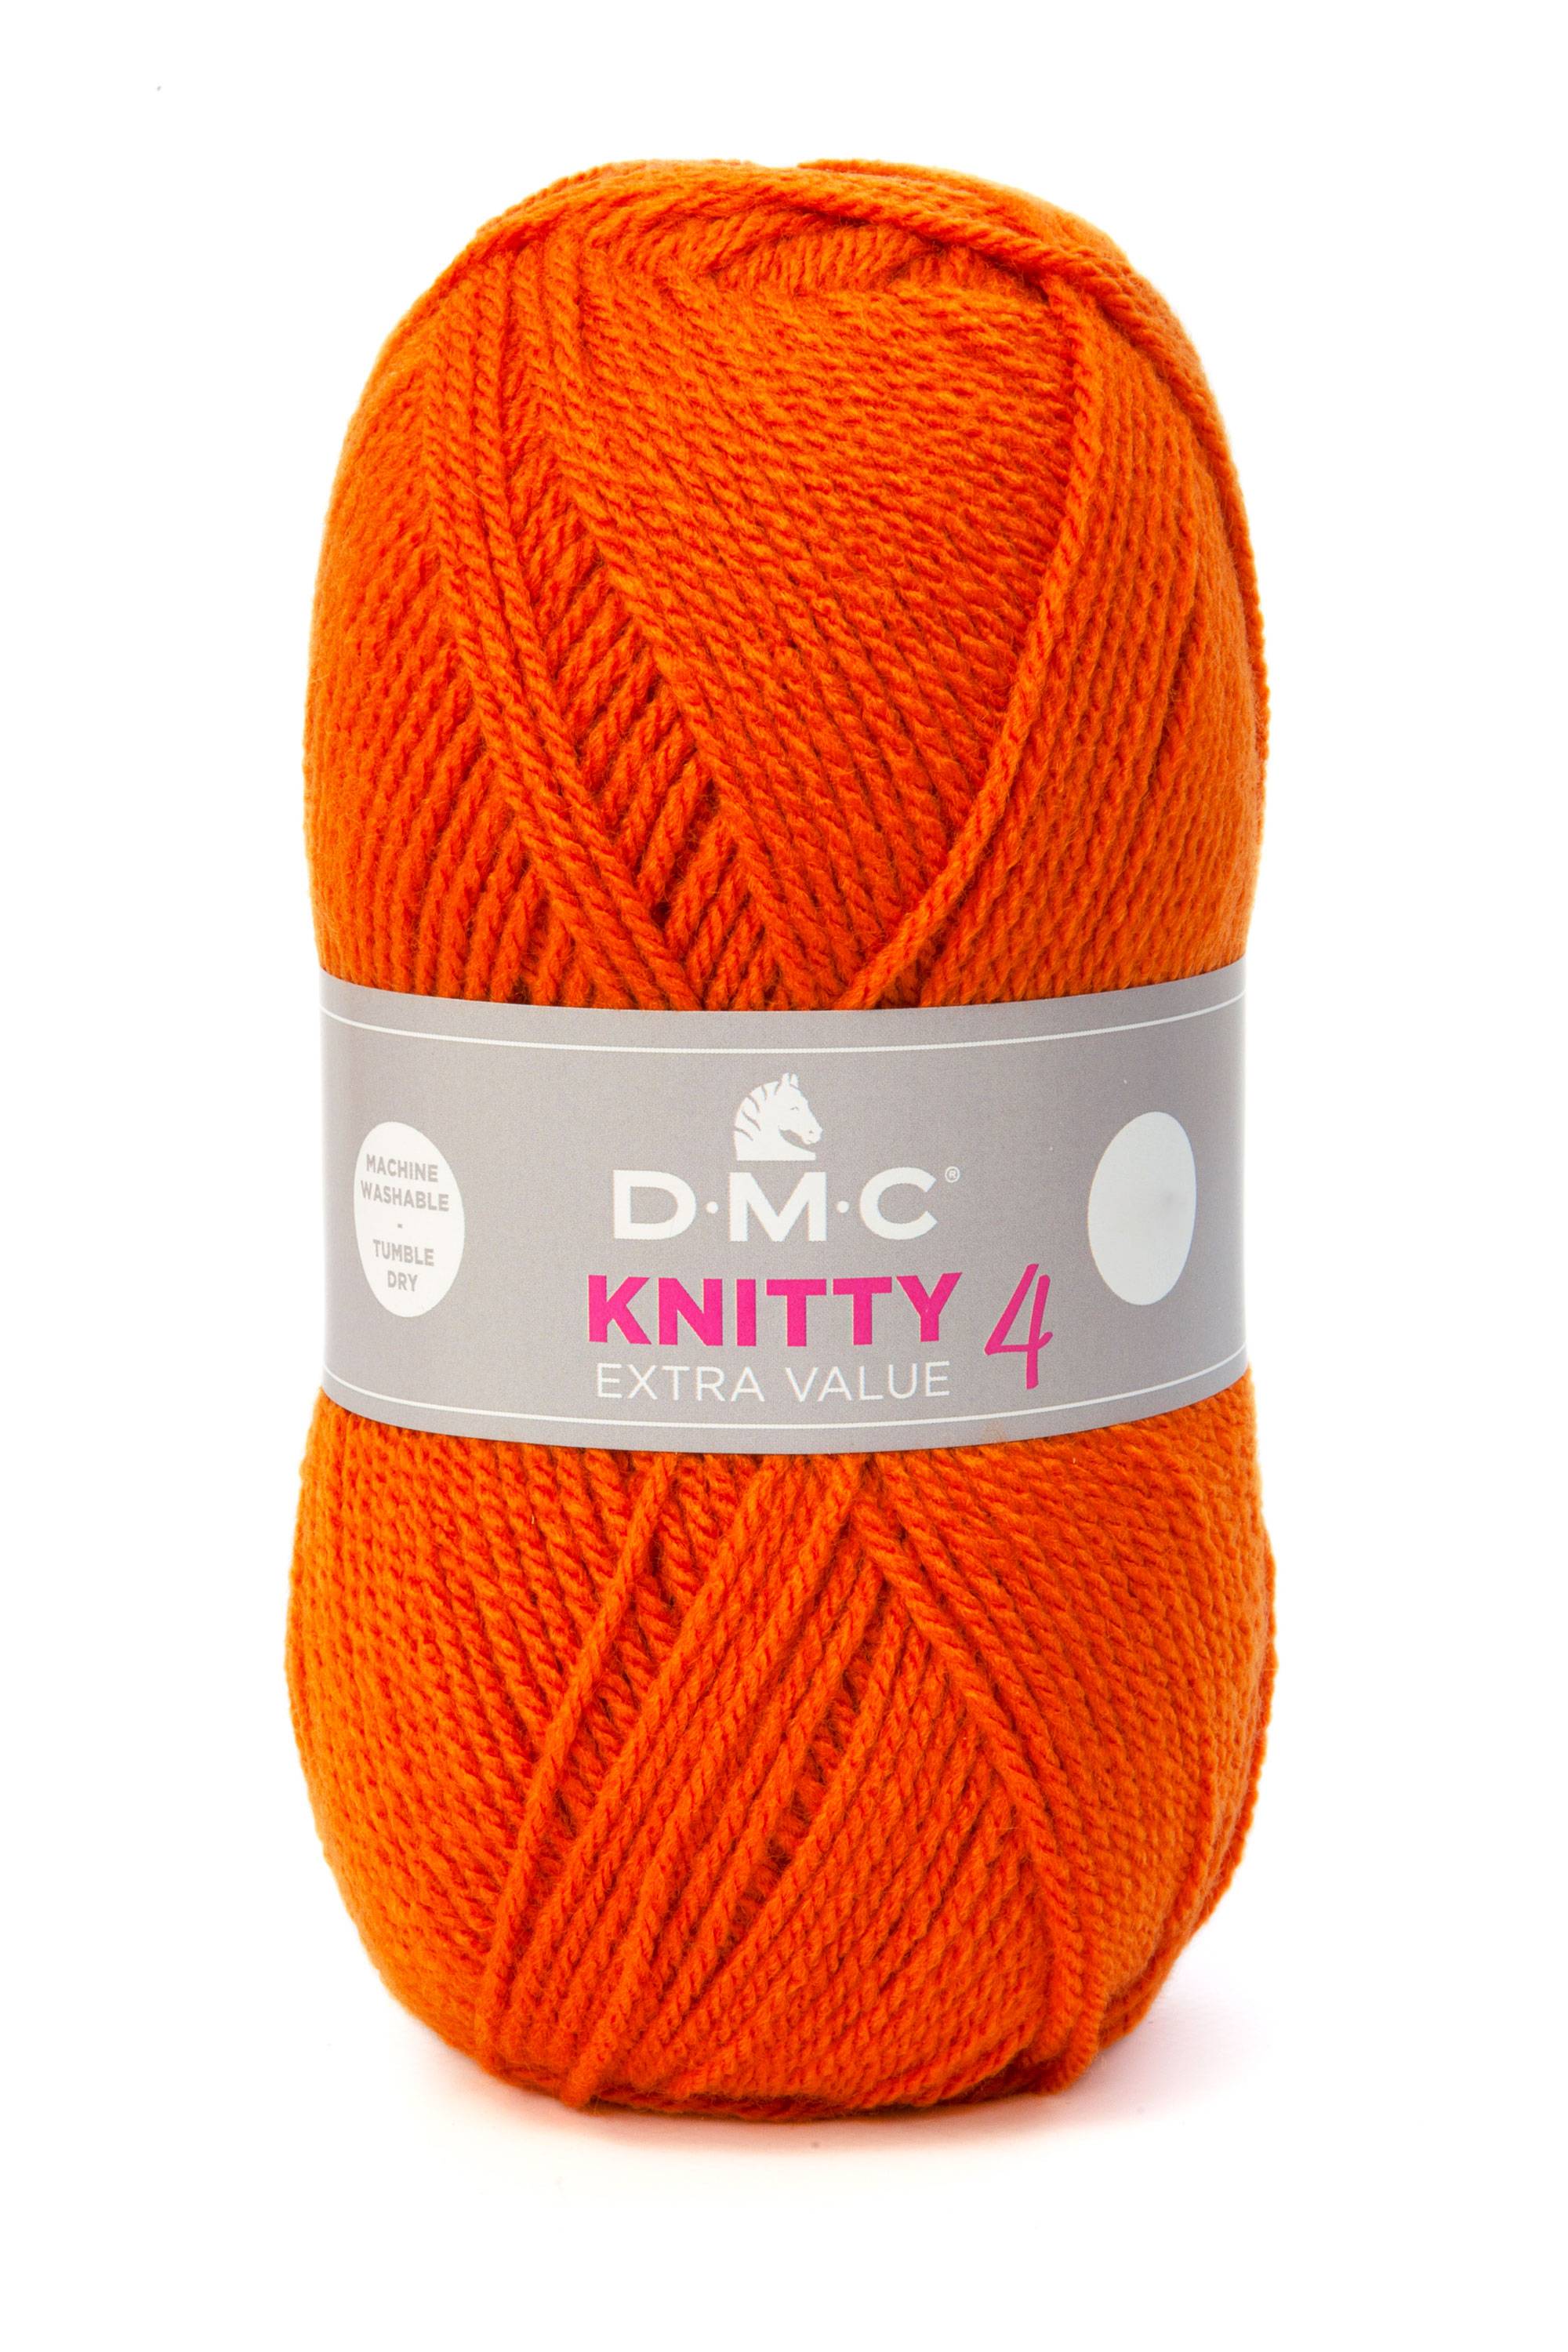 Lana Dmc Knitty 4 Colore 647